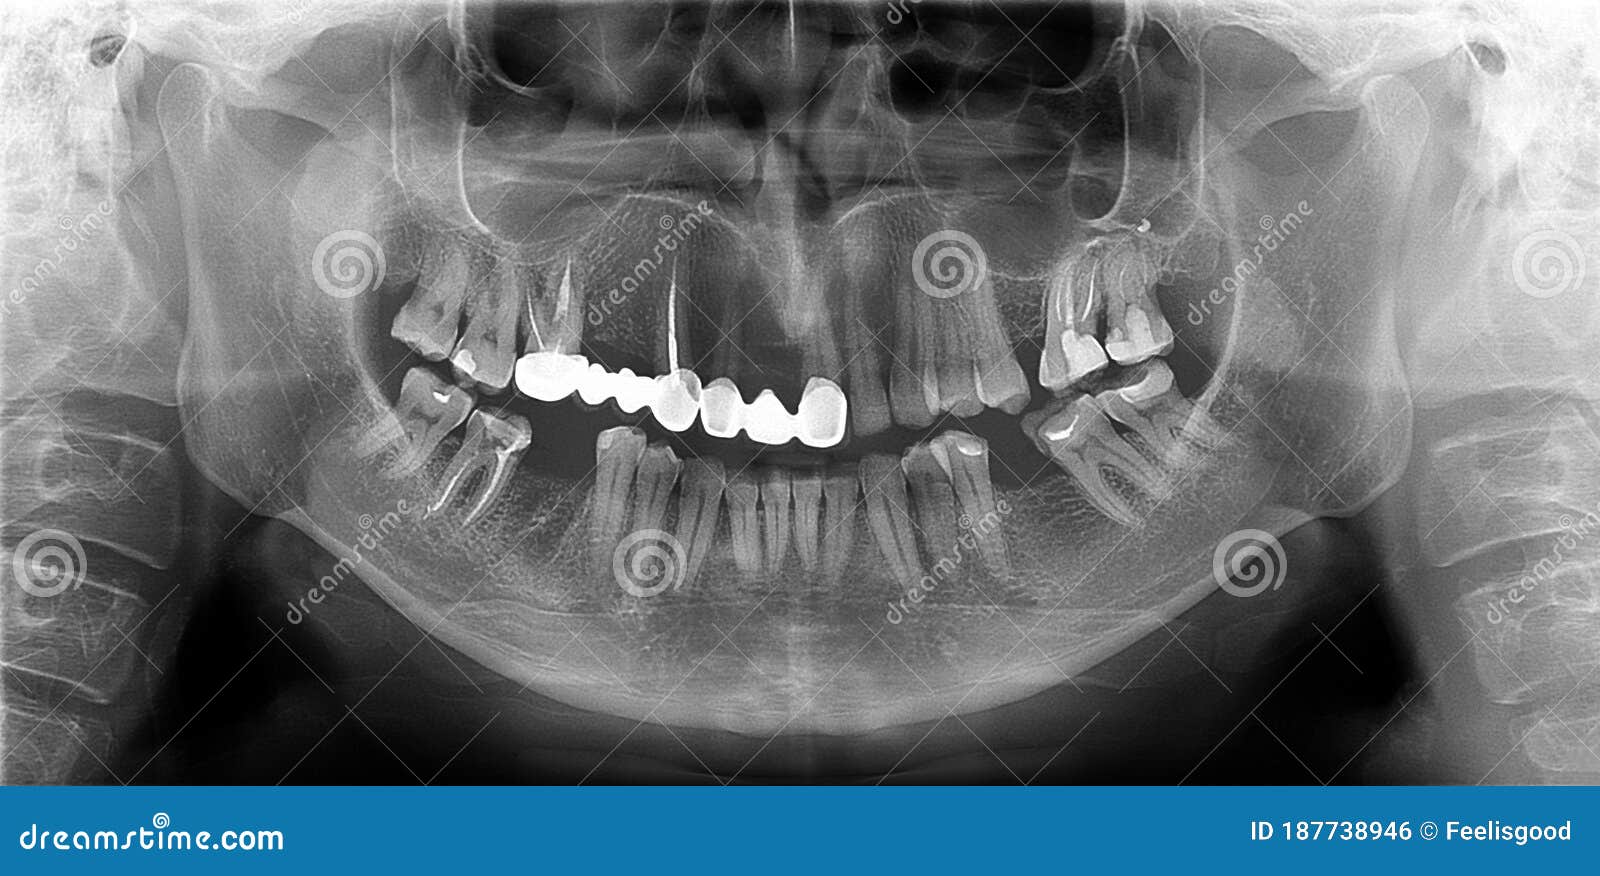 panoramic radiograph is a panoramic scanning dental x-ray of the maxilla and mandible